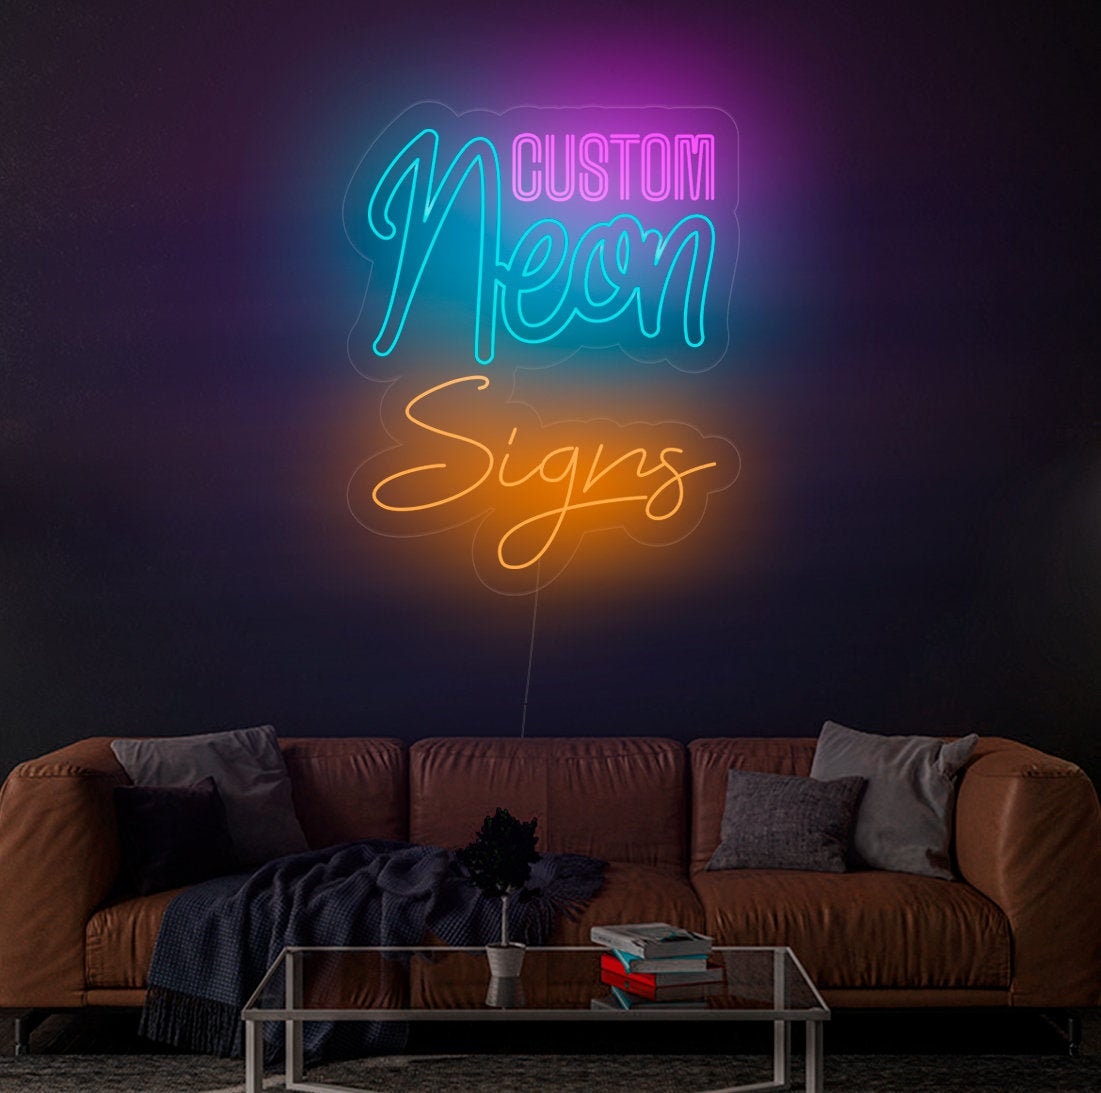 Custom Neon Signs - LED Neon Sign, Interior Decor, Room decor, Wall Decor, Custom Sign, Neon For Home